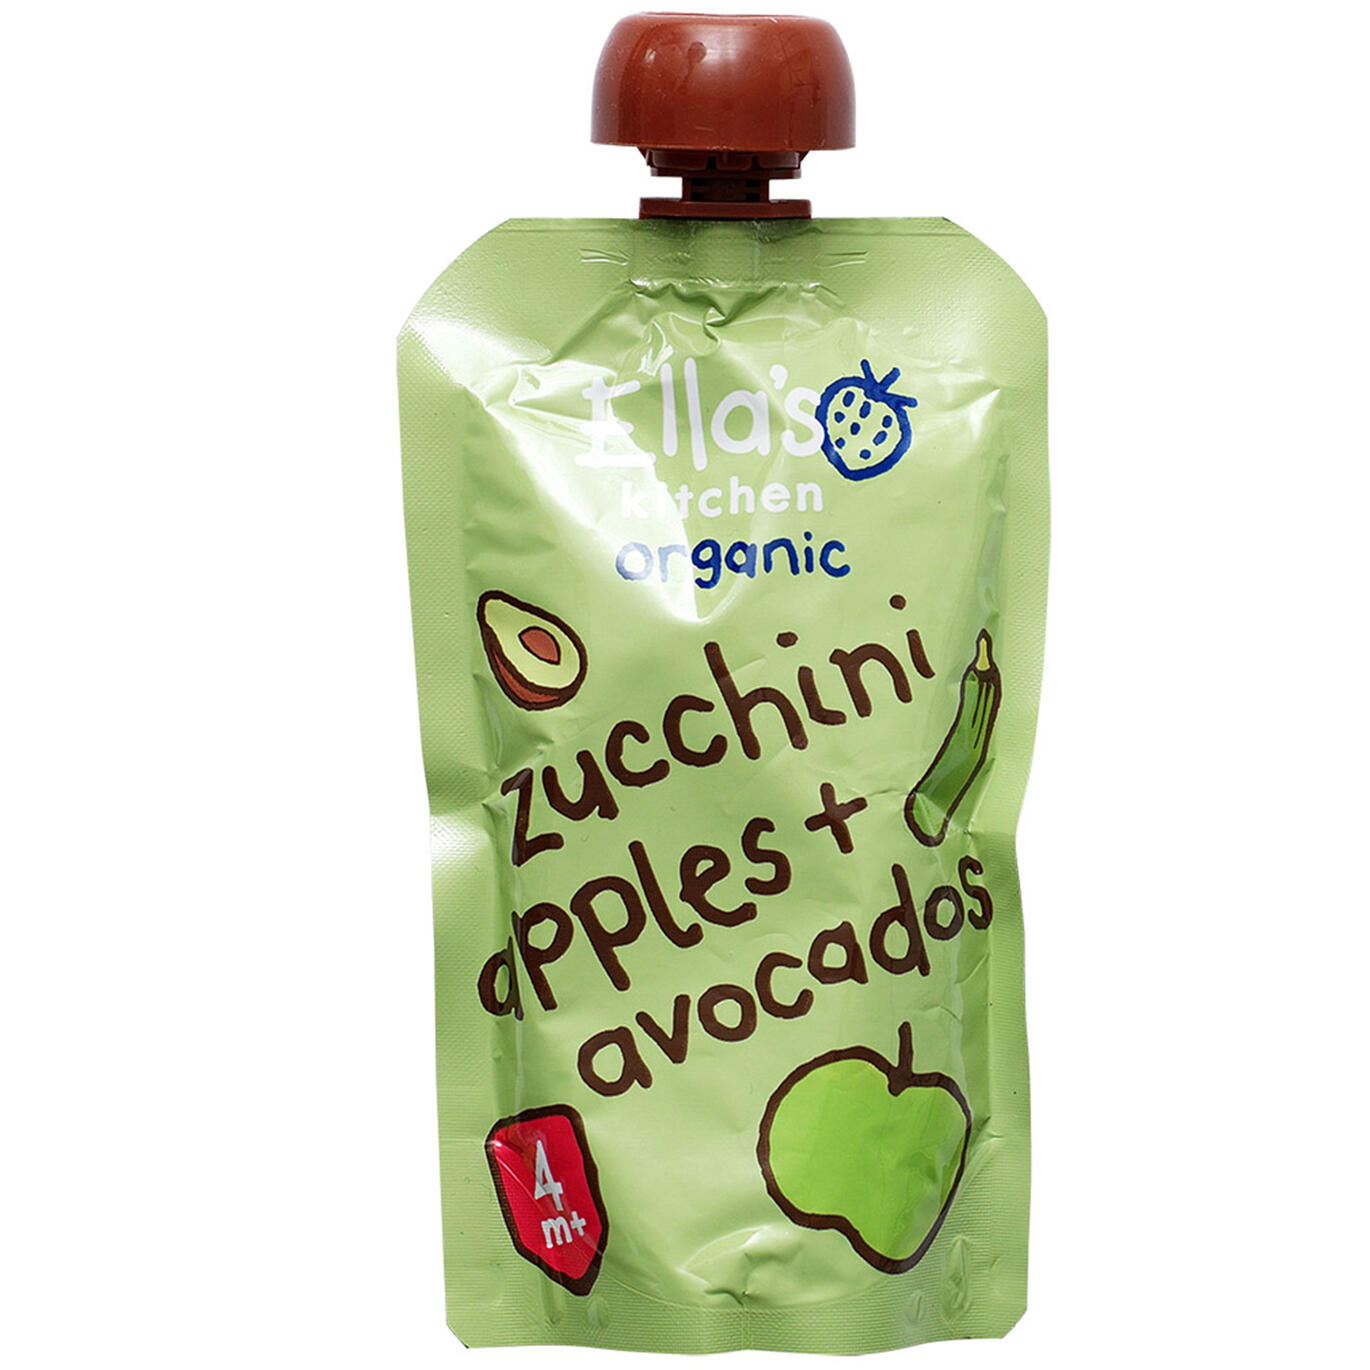 zucchini, apples + avocados Ella's kitchen